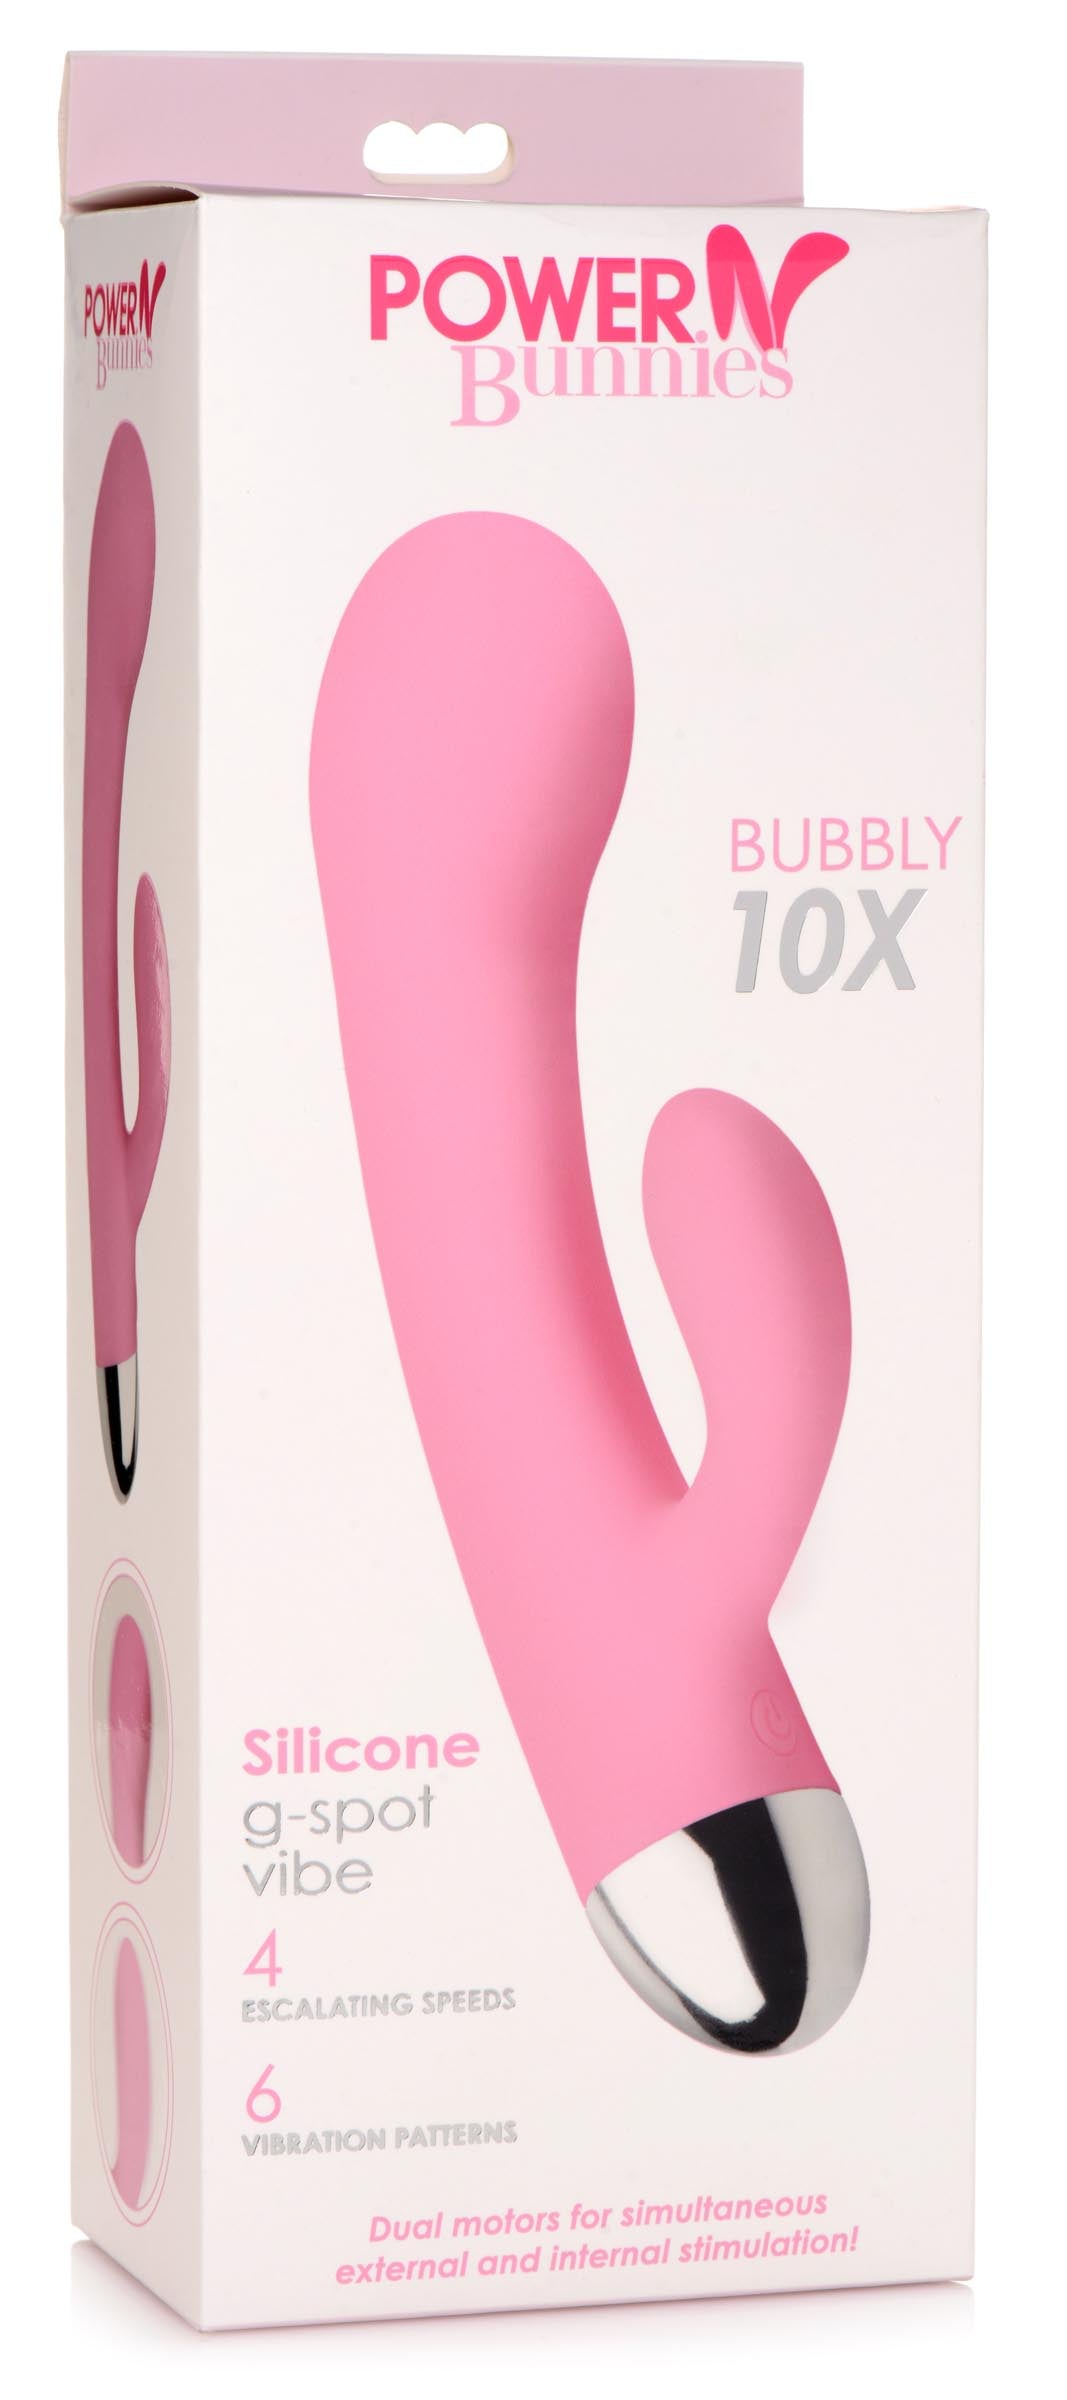 Bubbly 10X Silicone G-Spot Vibrator - UABDSM